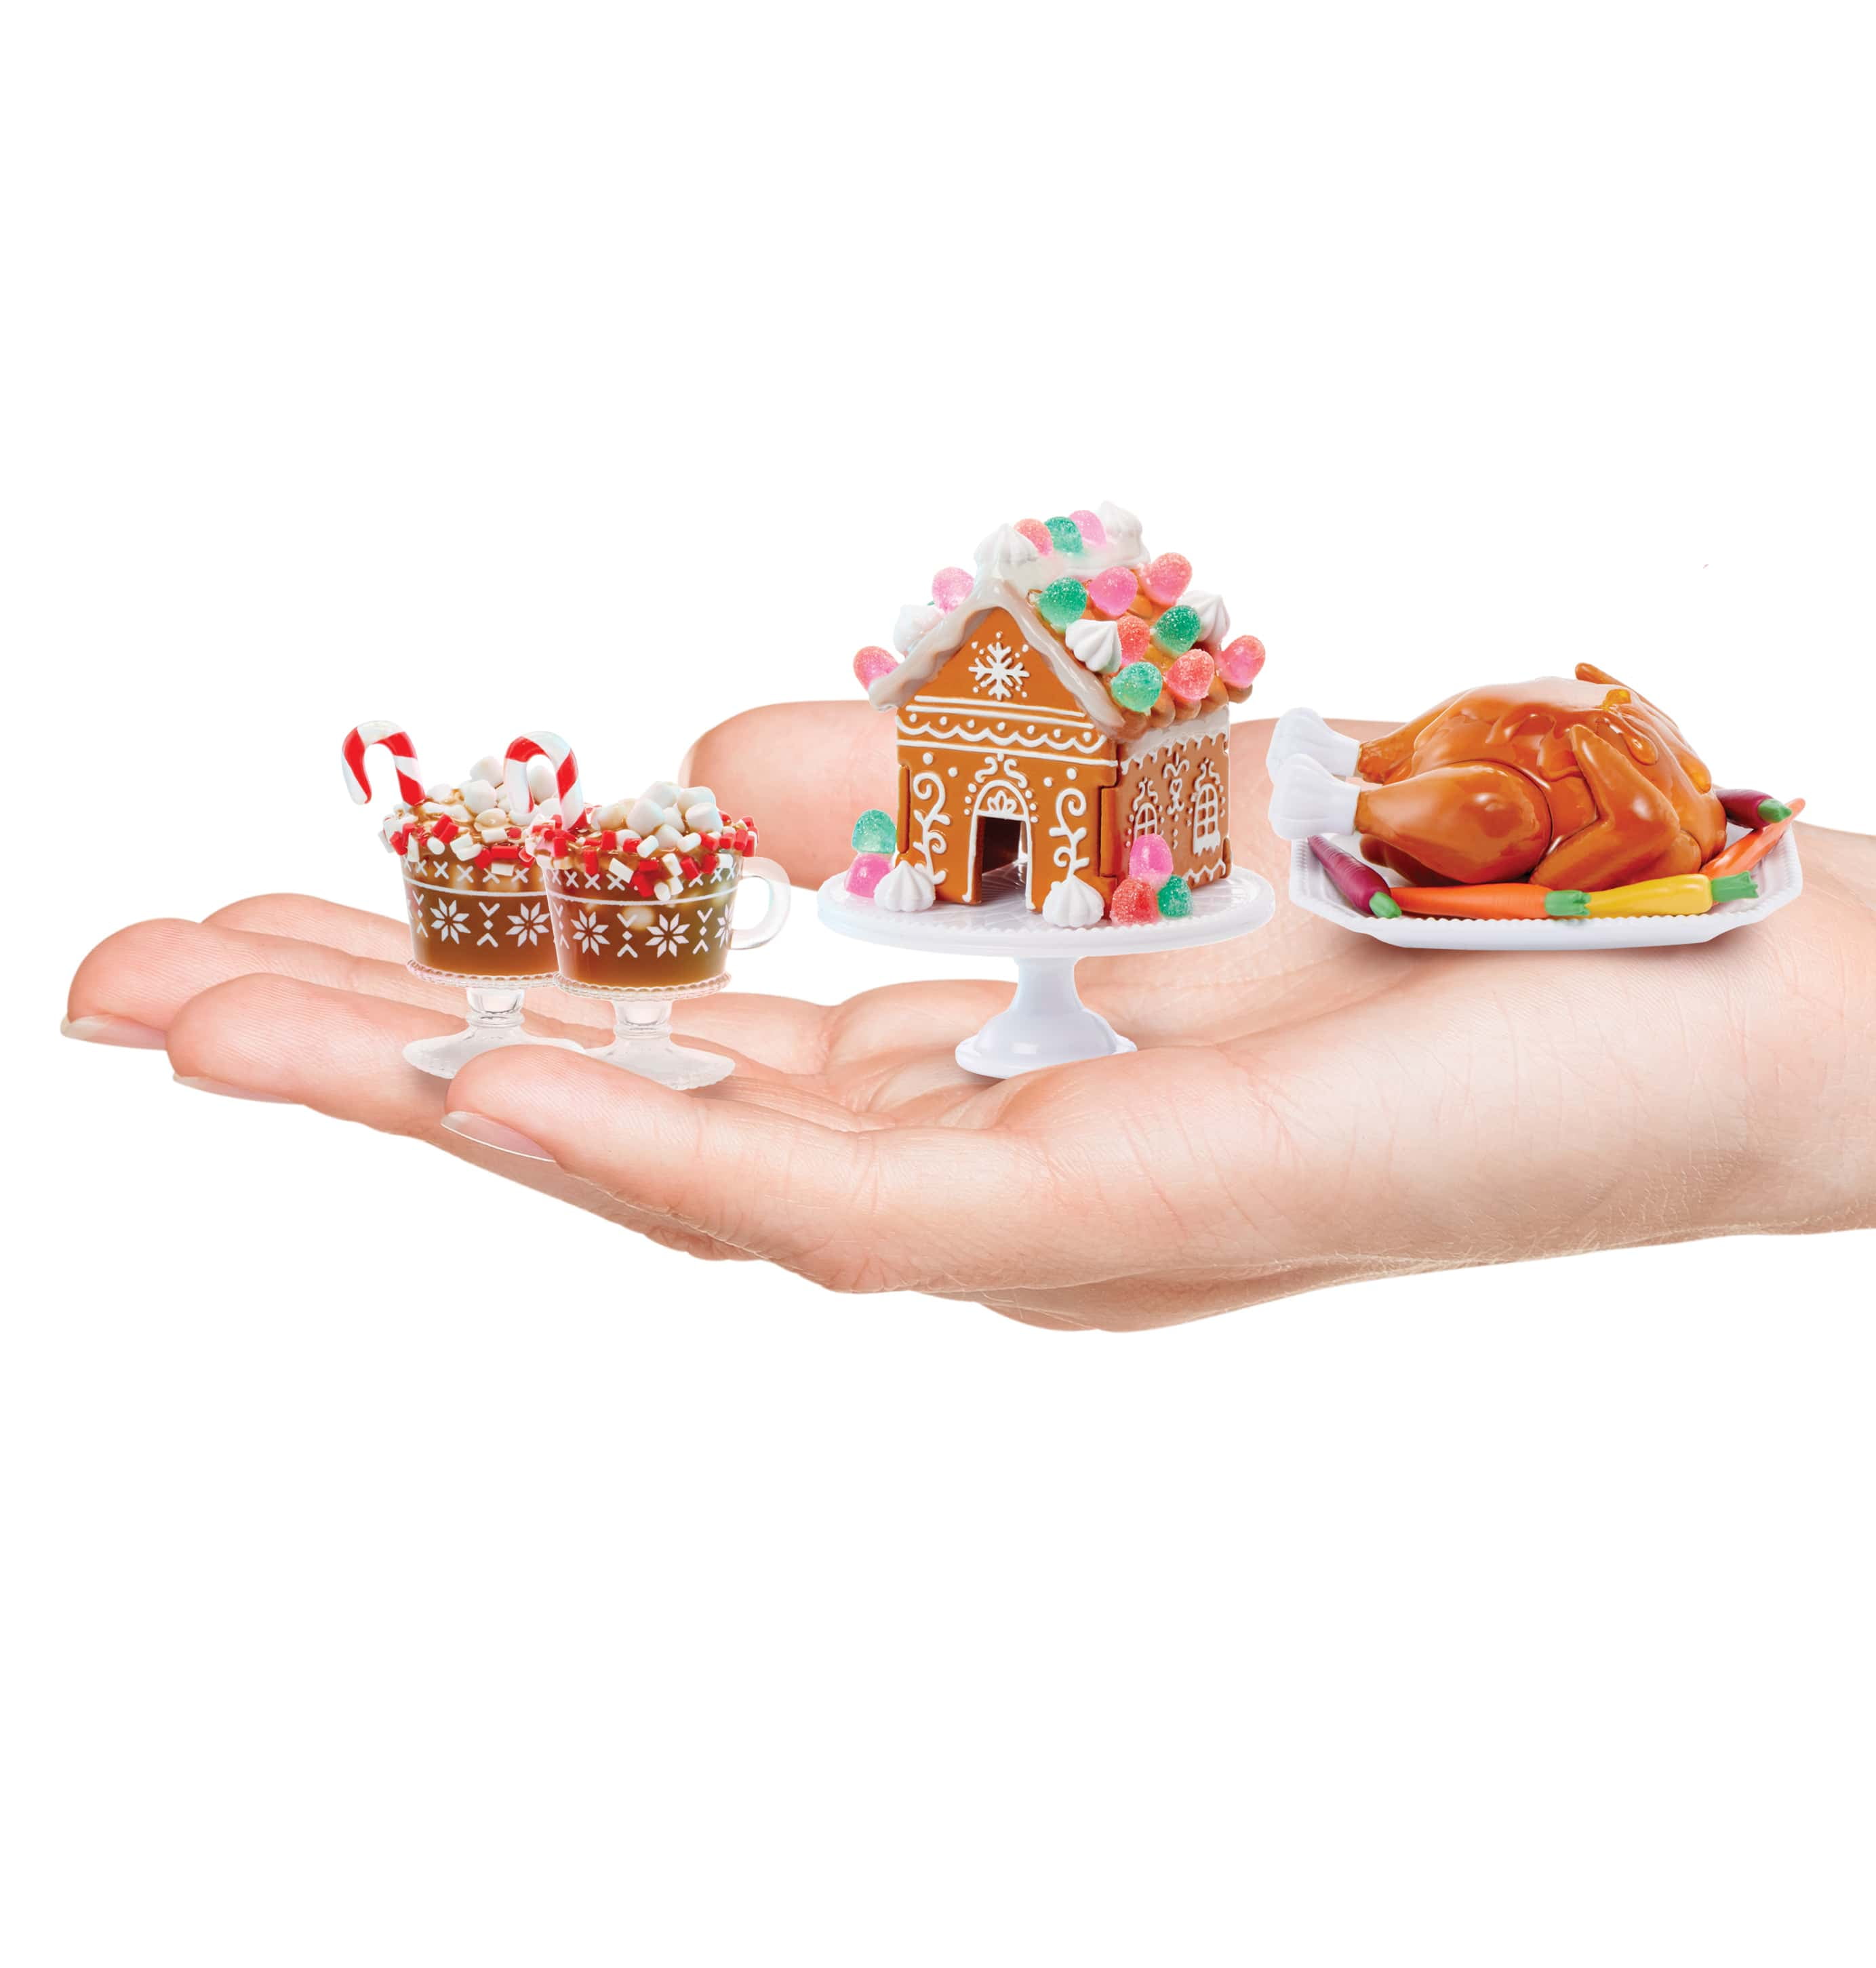 Make It Mini Food Holiday Series 1 Mini Collectibles, MGA's Miniverse,  Seasonal Stocking Stuffer, Blind Packaging, DIY, Resin, Replica Food, Not